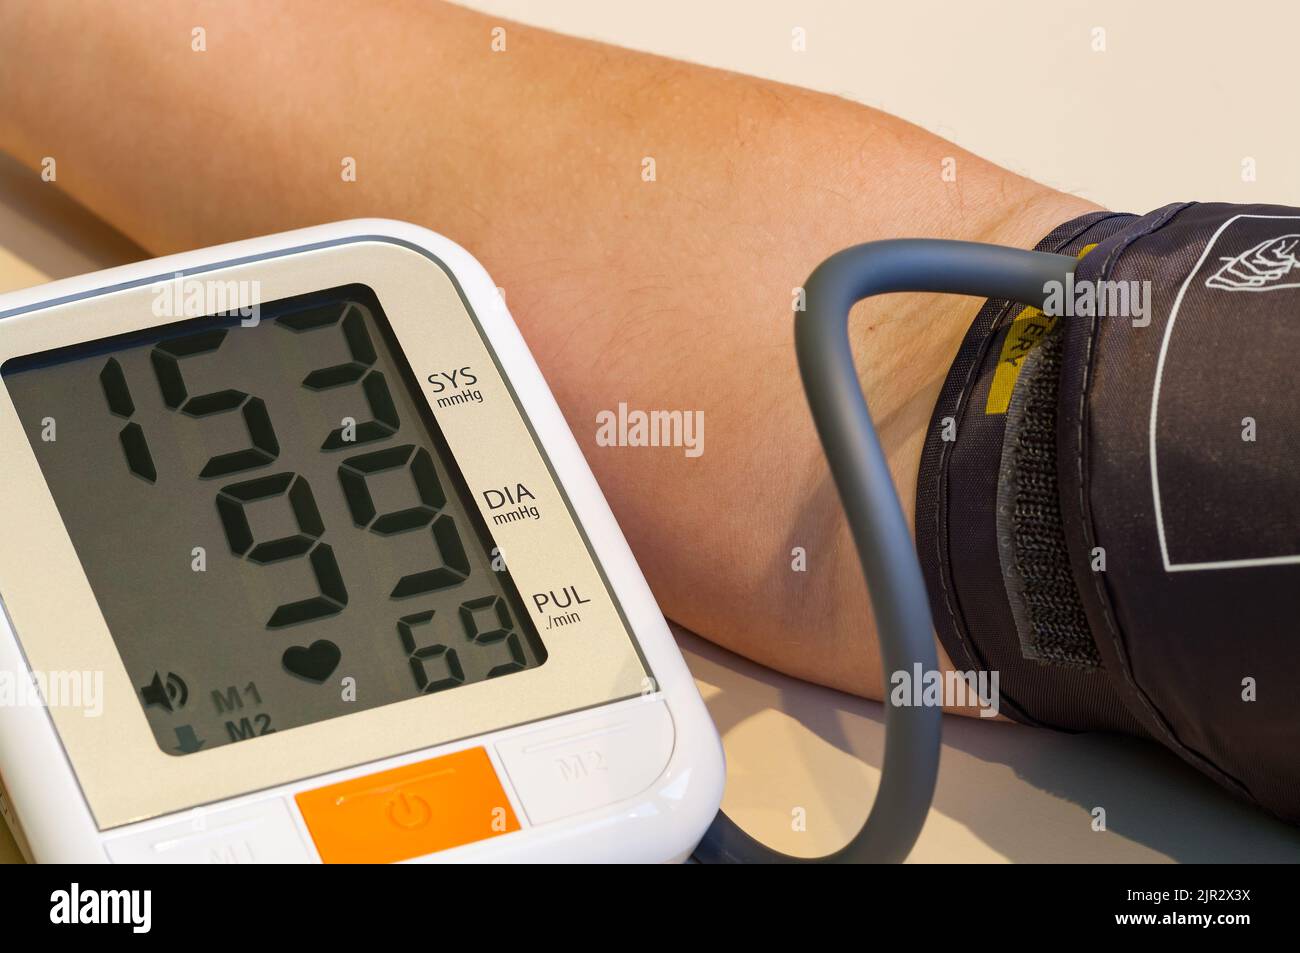 Aparato de presión arterial fotografías e imágenes de alta resolución -  Alamy